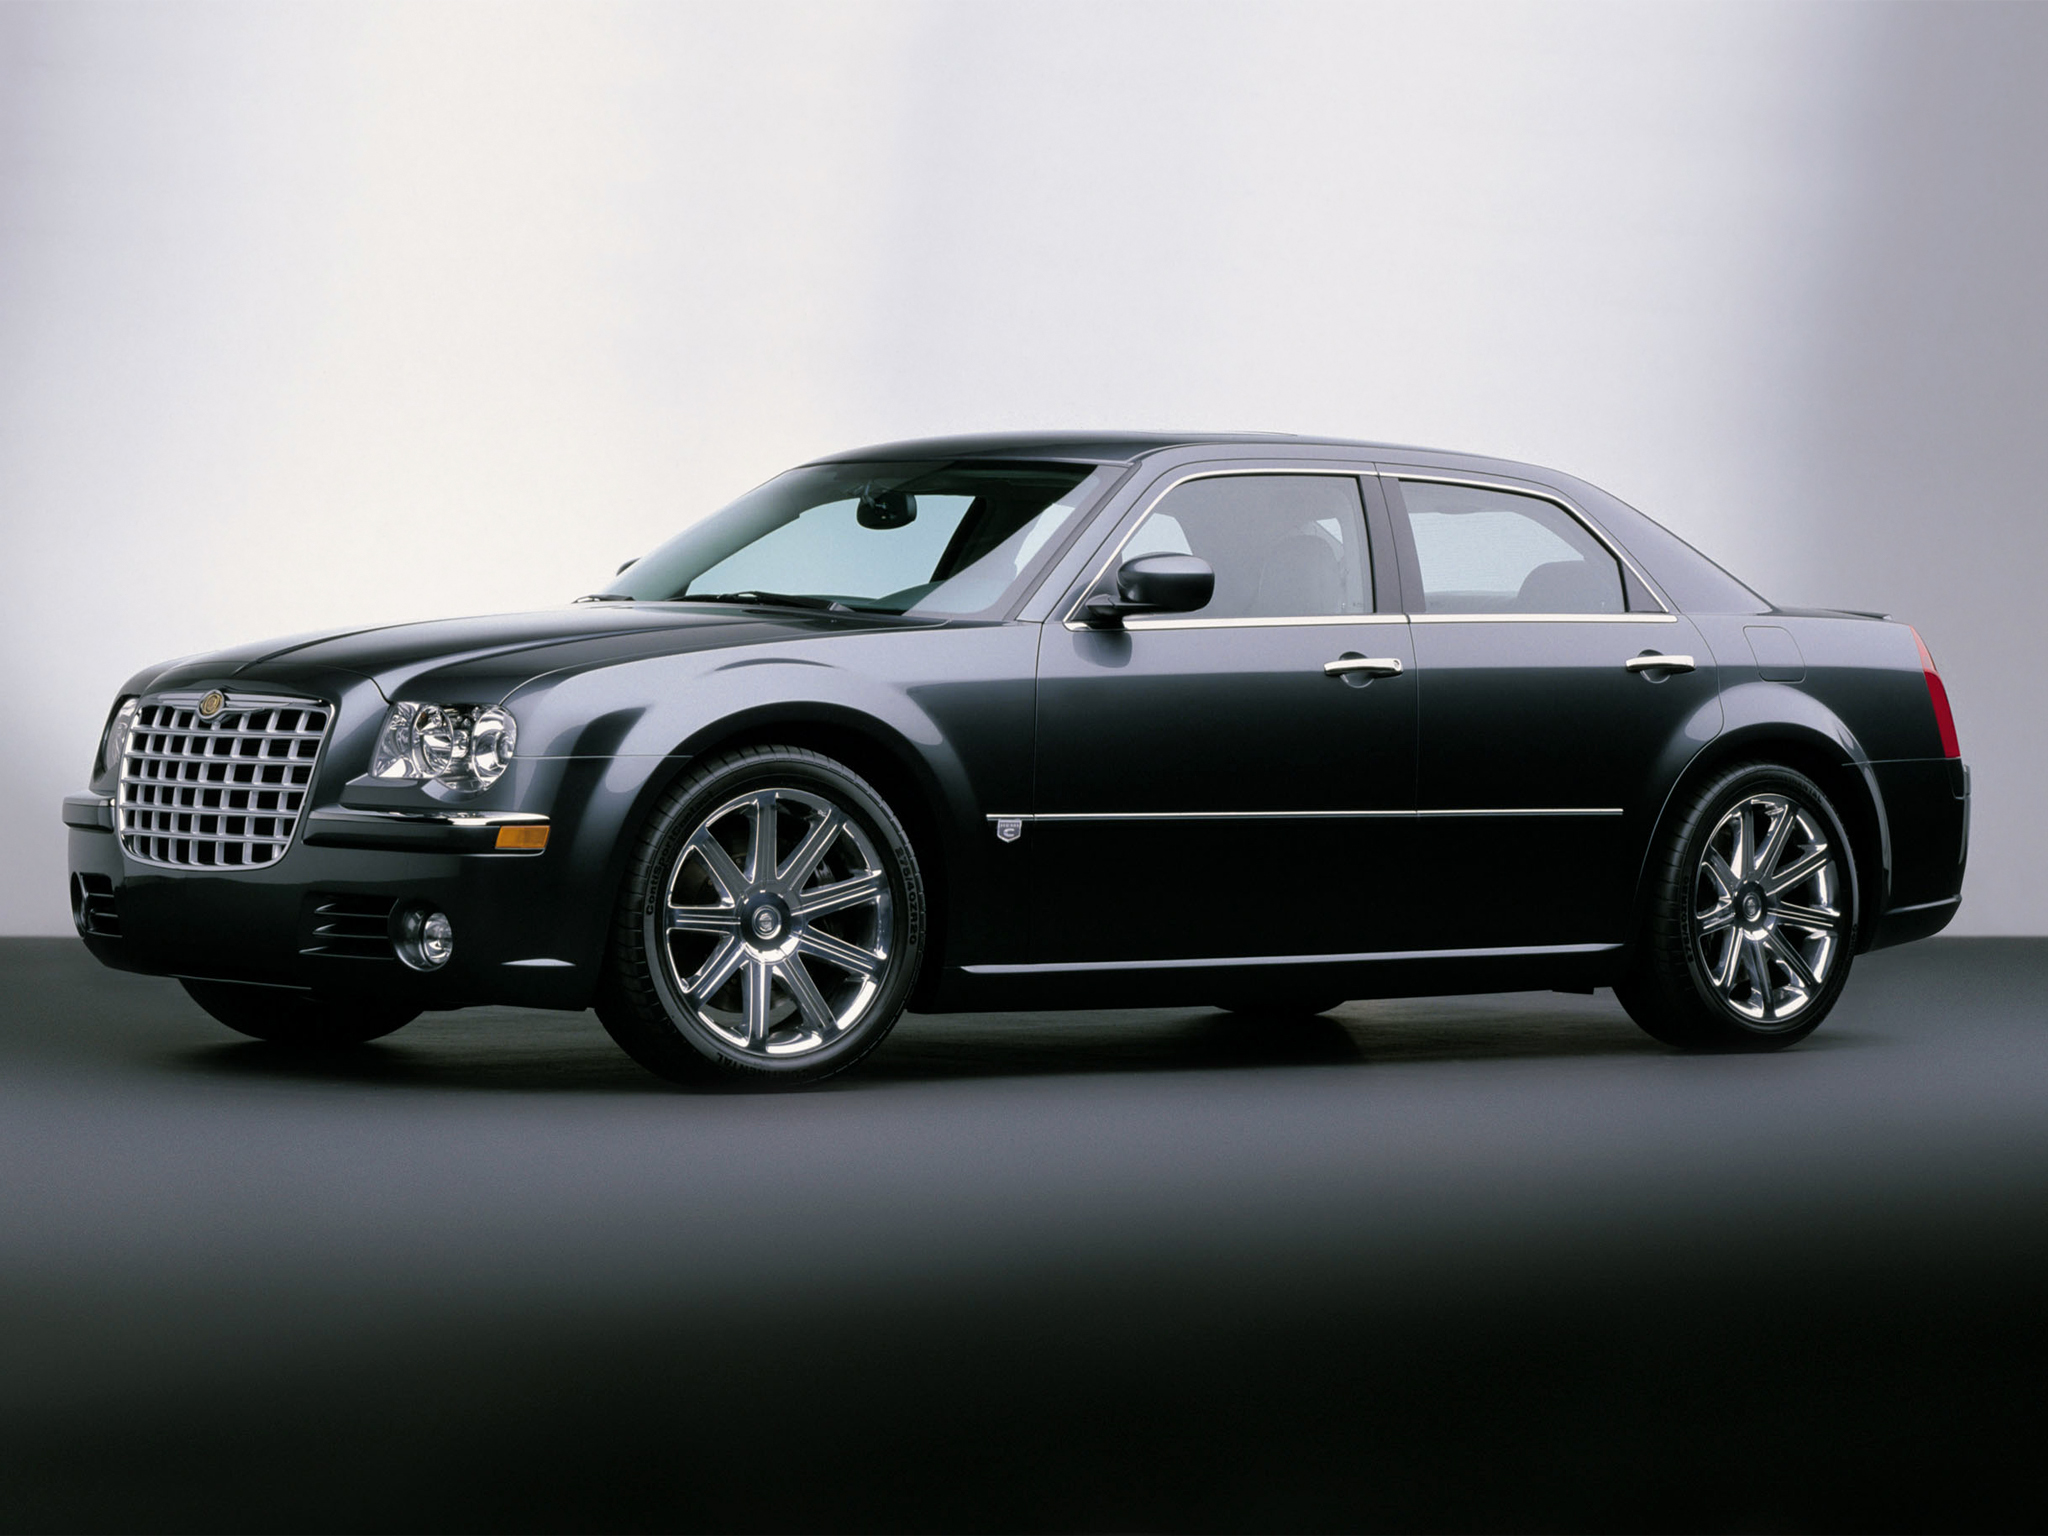 2003, Chrysler, 300c, Concept,  lx , Luxury, L x Wallpaper